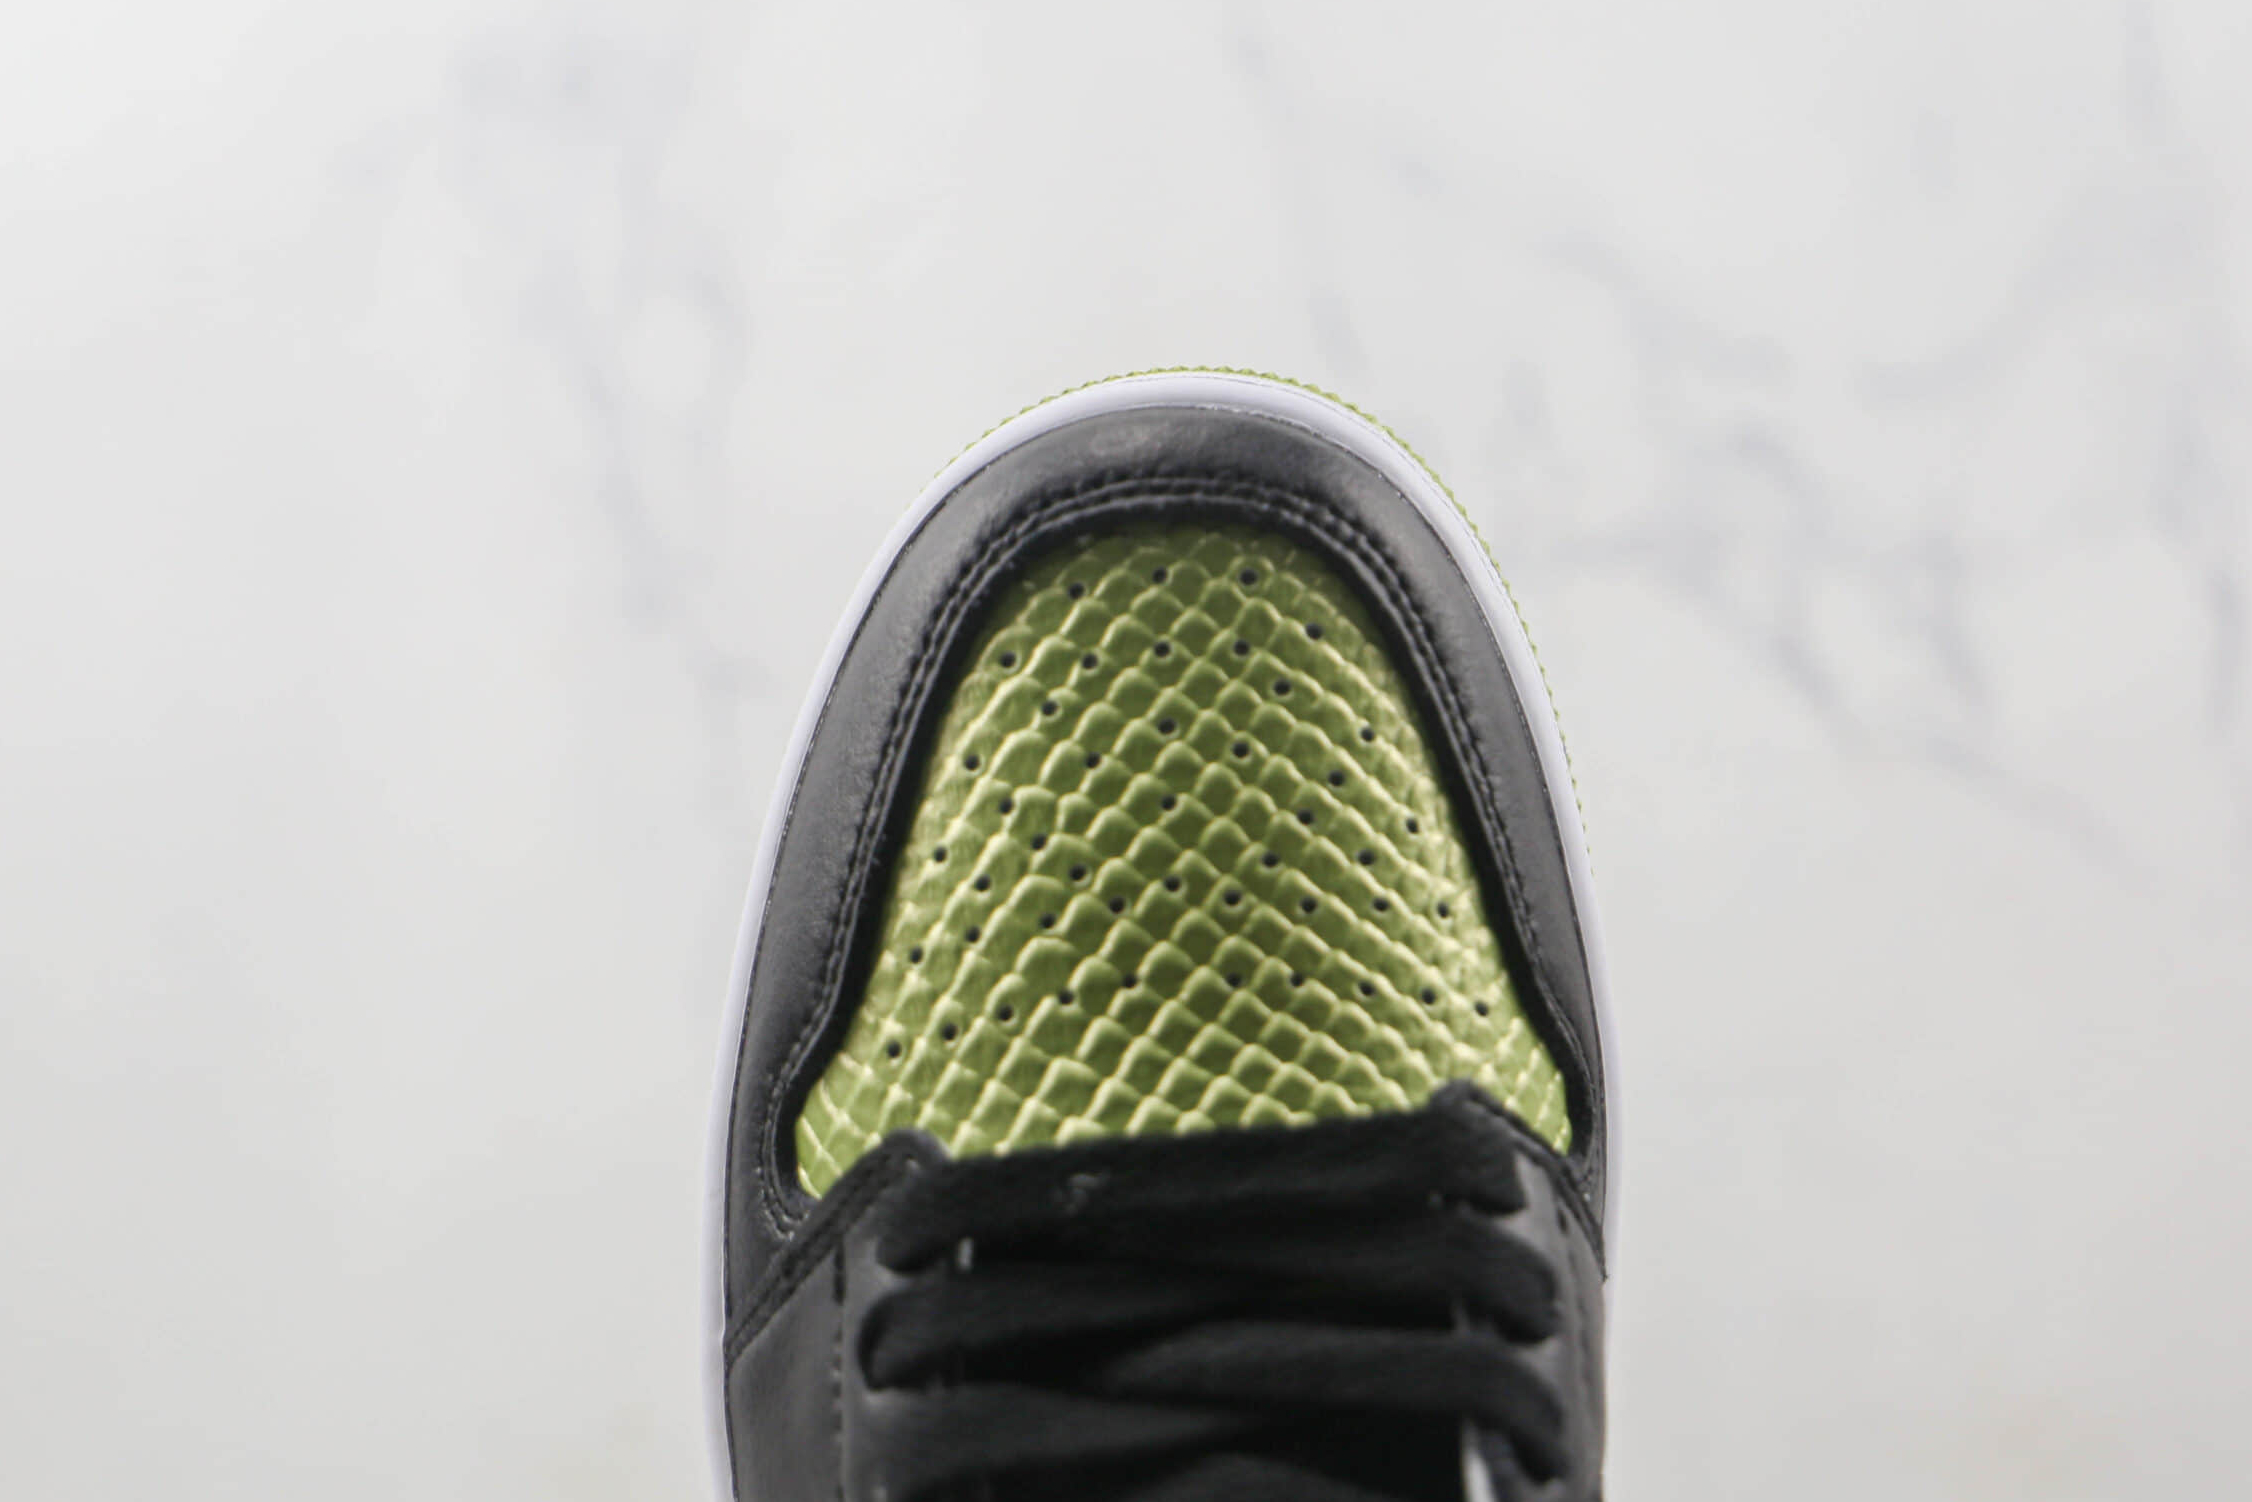 Air Jordan 1 Low SE 'Vivid Green Snakeskin' DX4446-301 - Striking Green Snakeskin Design for Sneaker Enthusiasts!